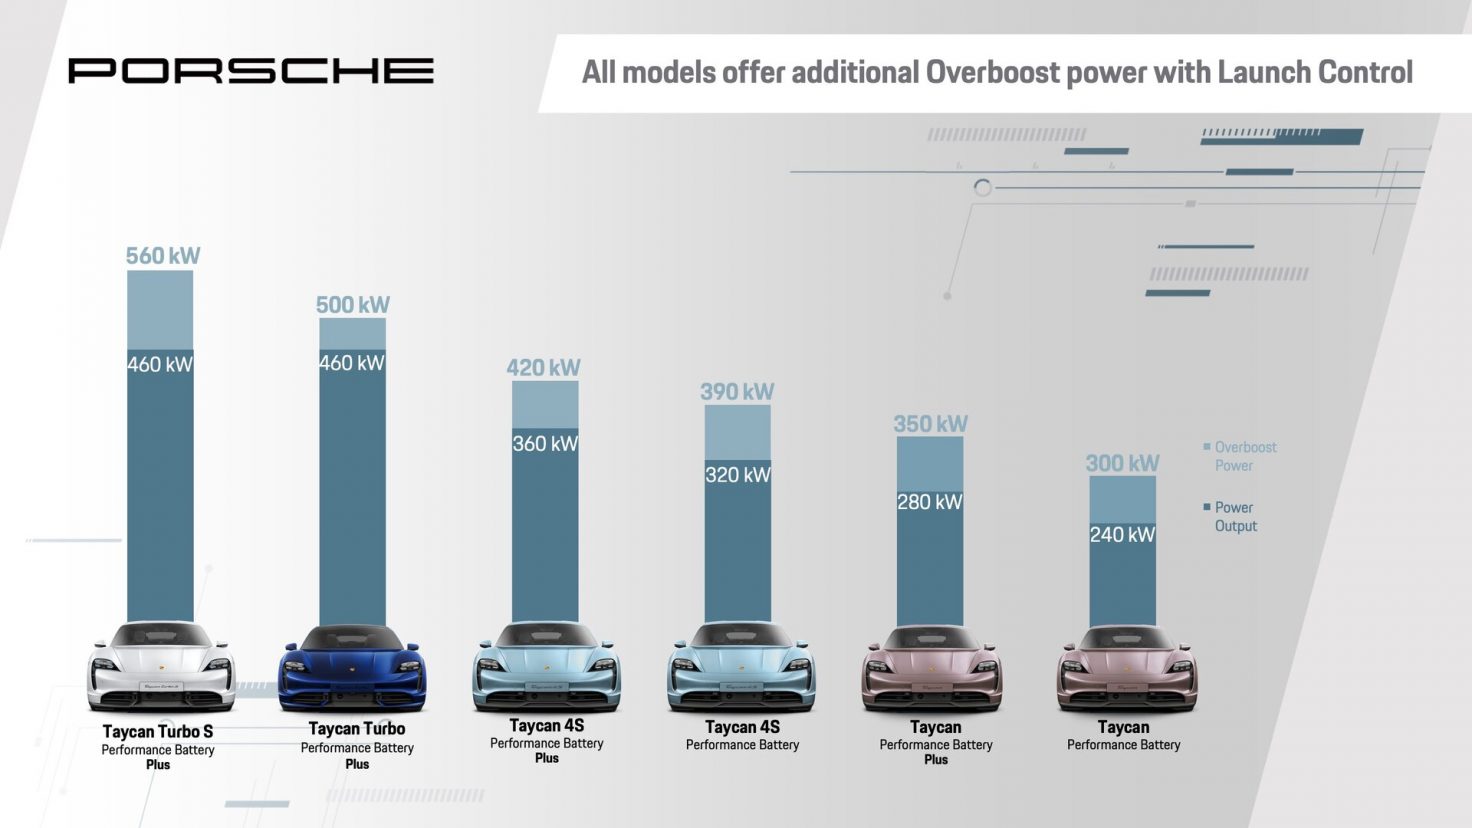 Porsche Overboost power